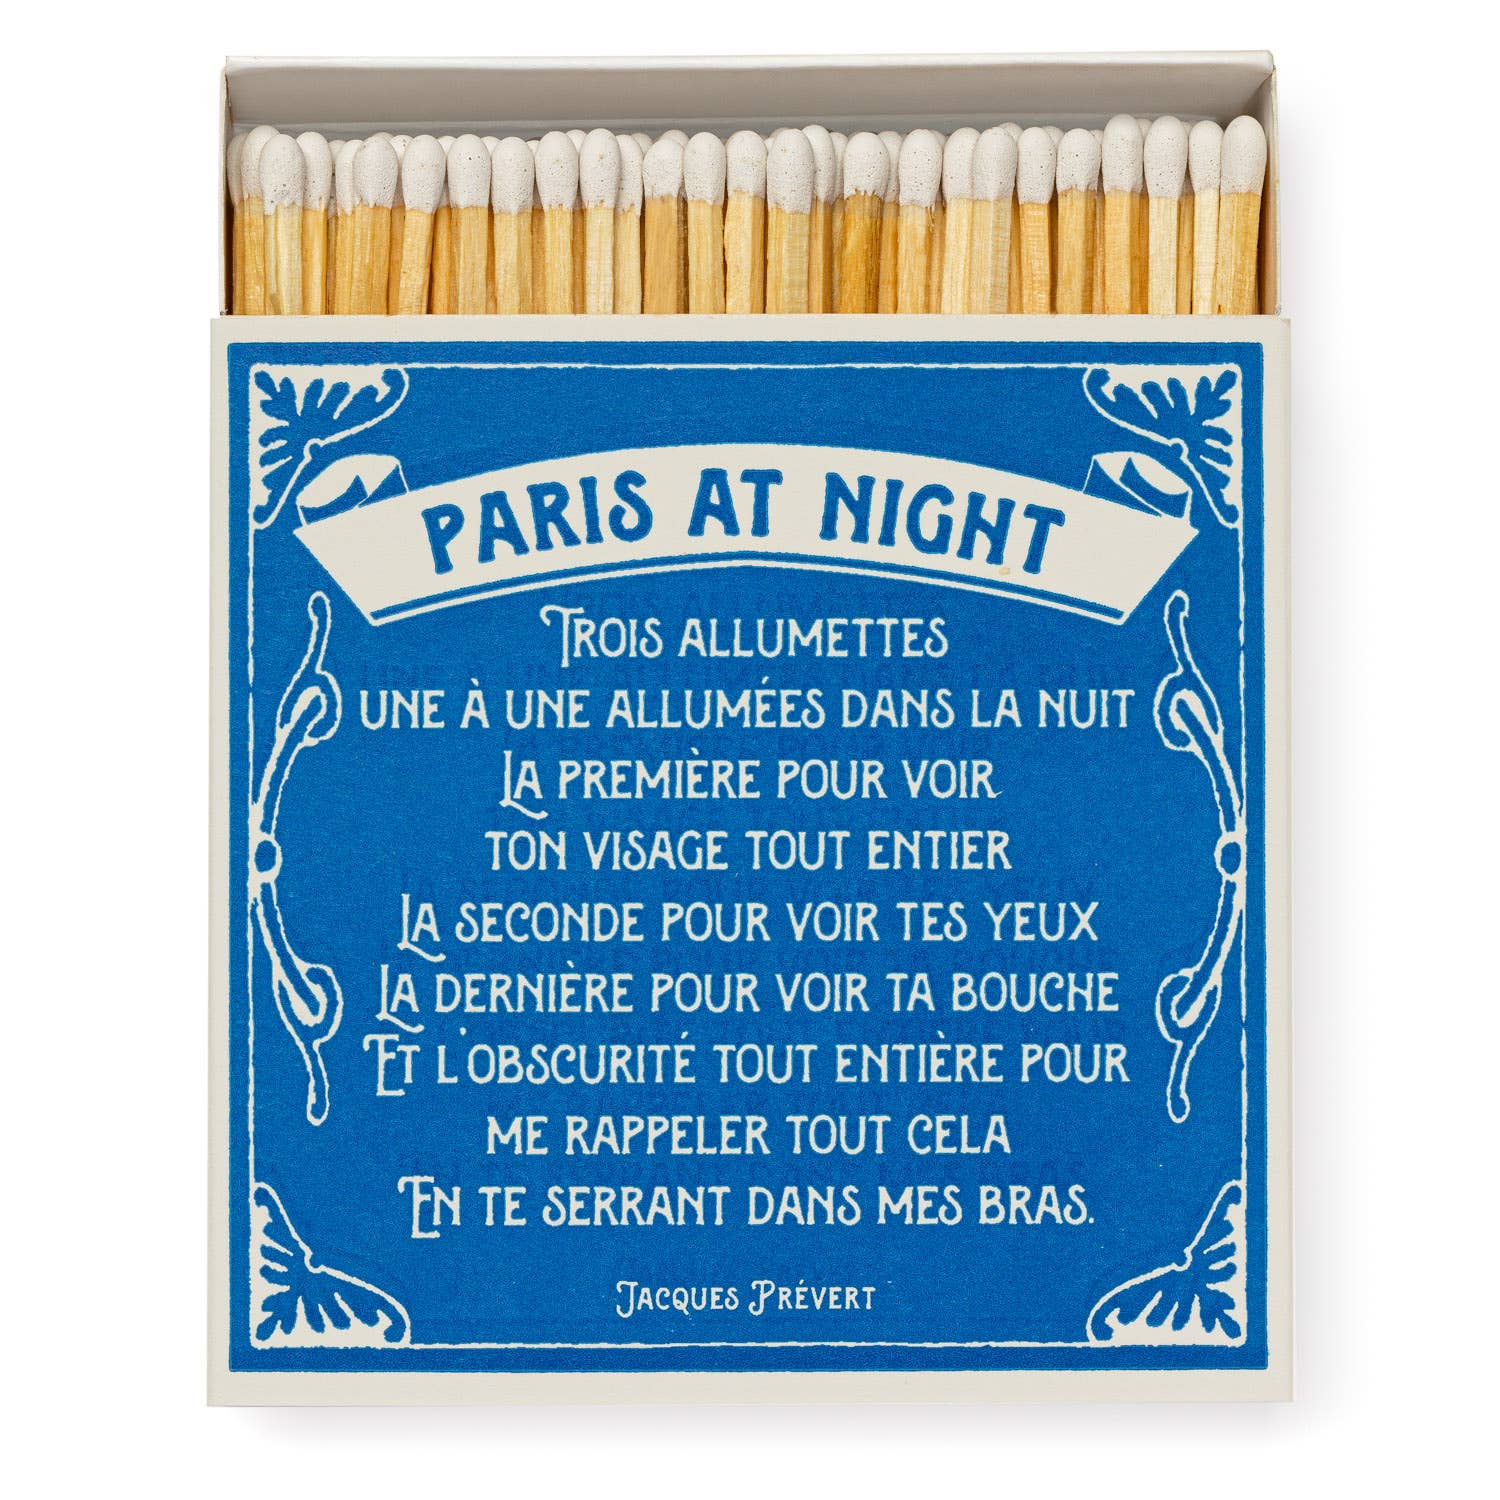 Paris at Night | Match Box